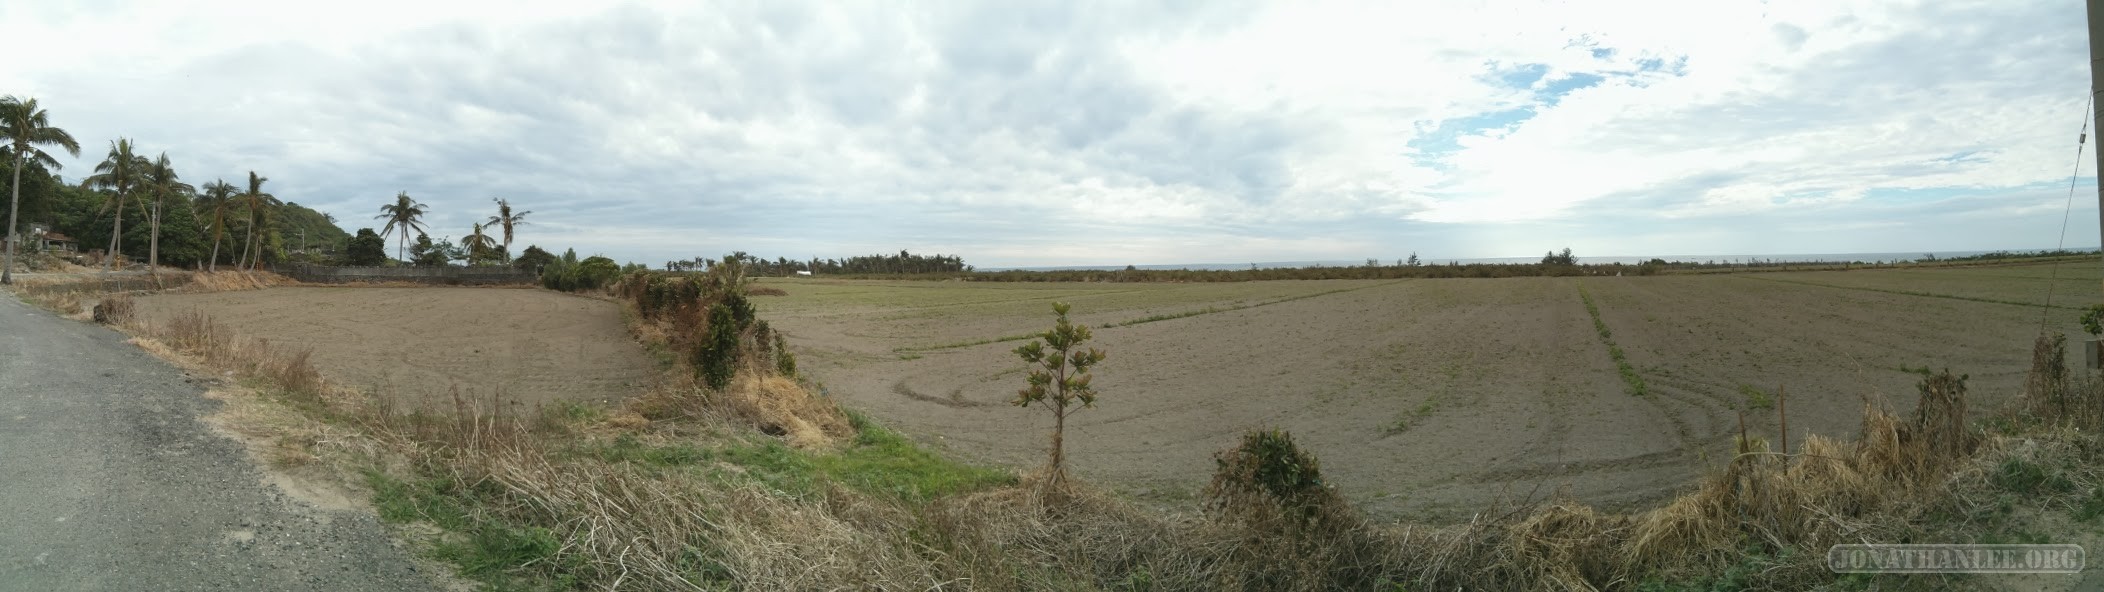 Kenting - panorama west coast field 1